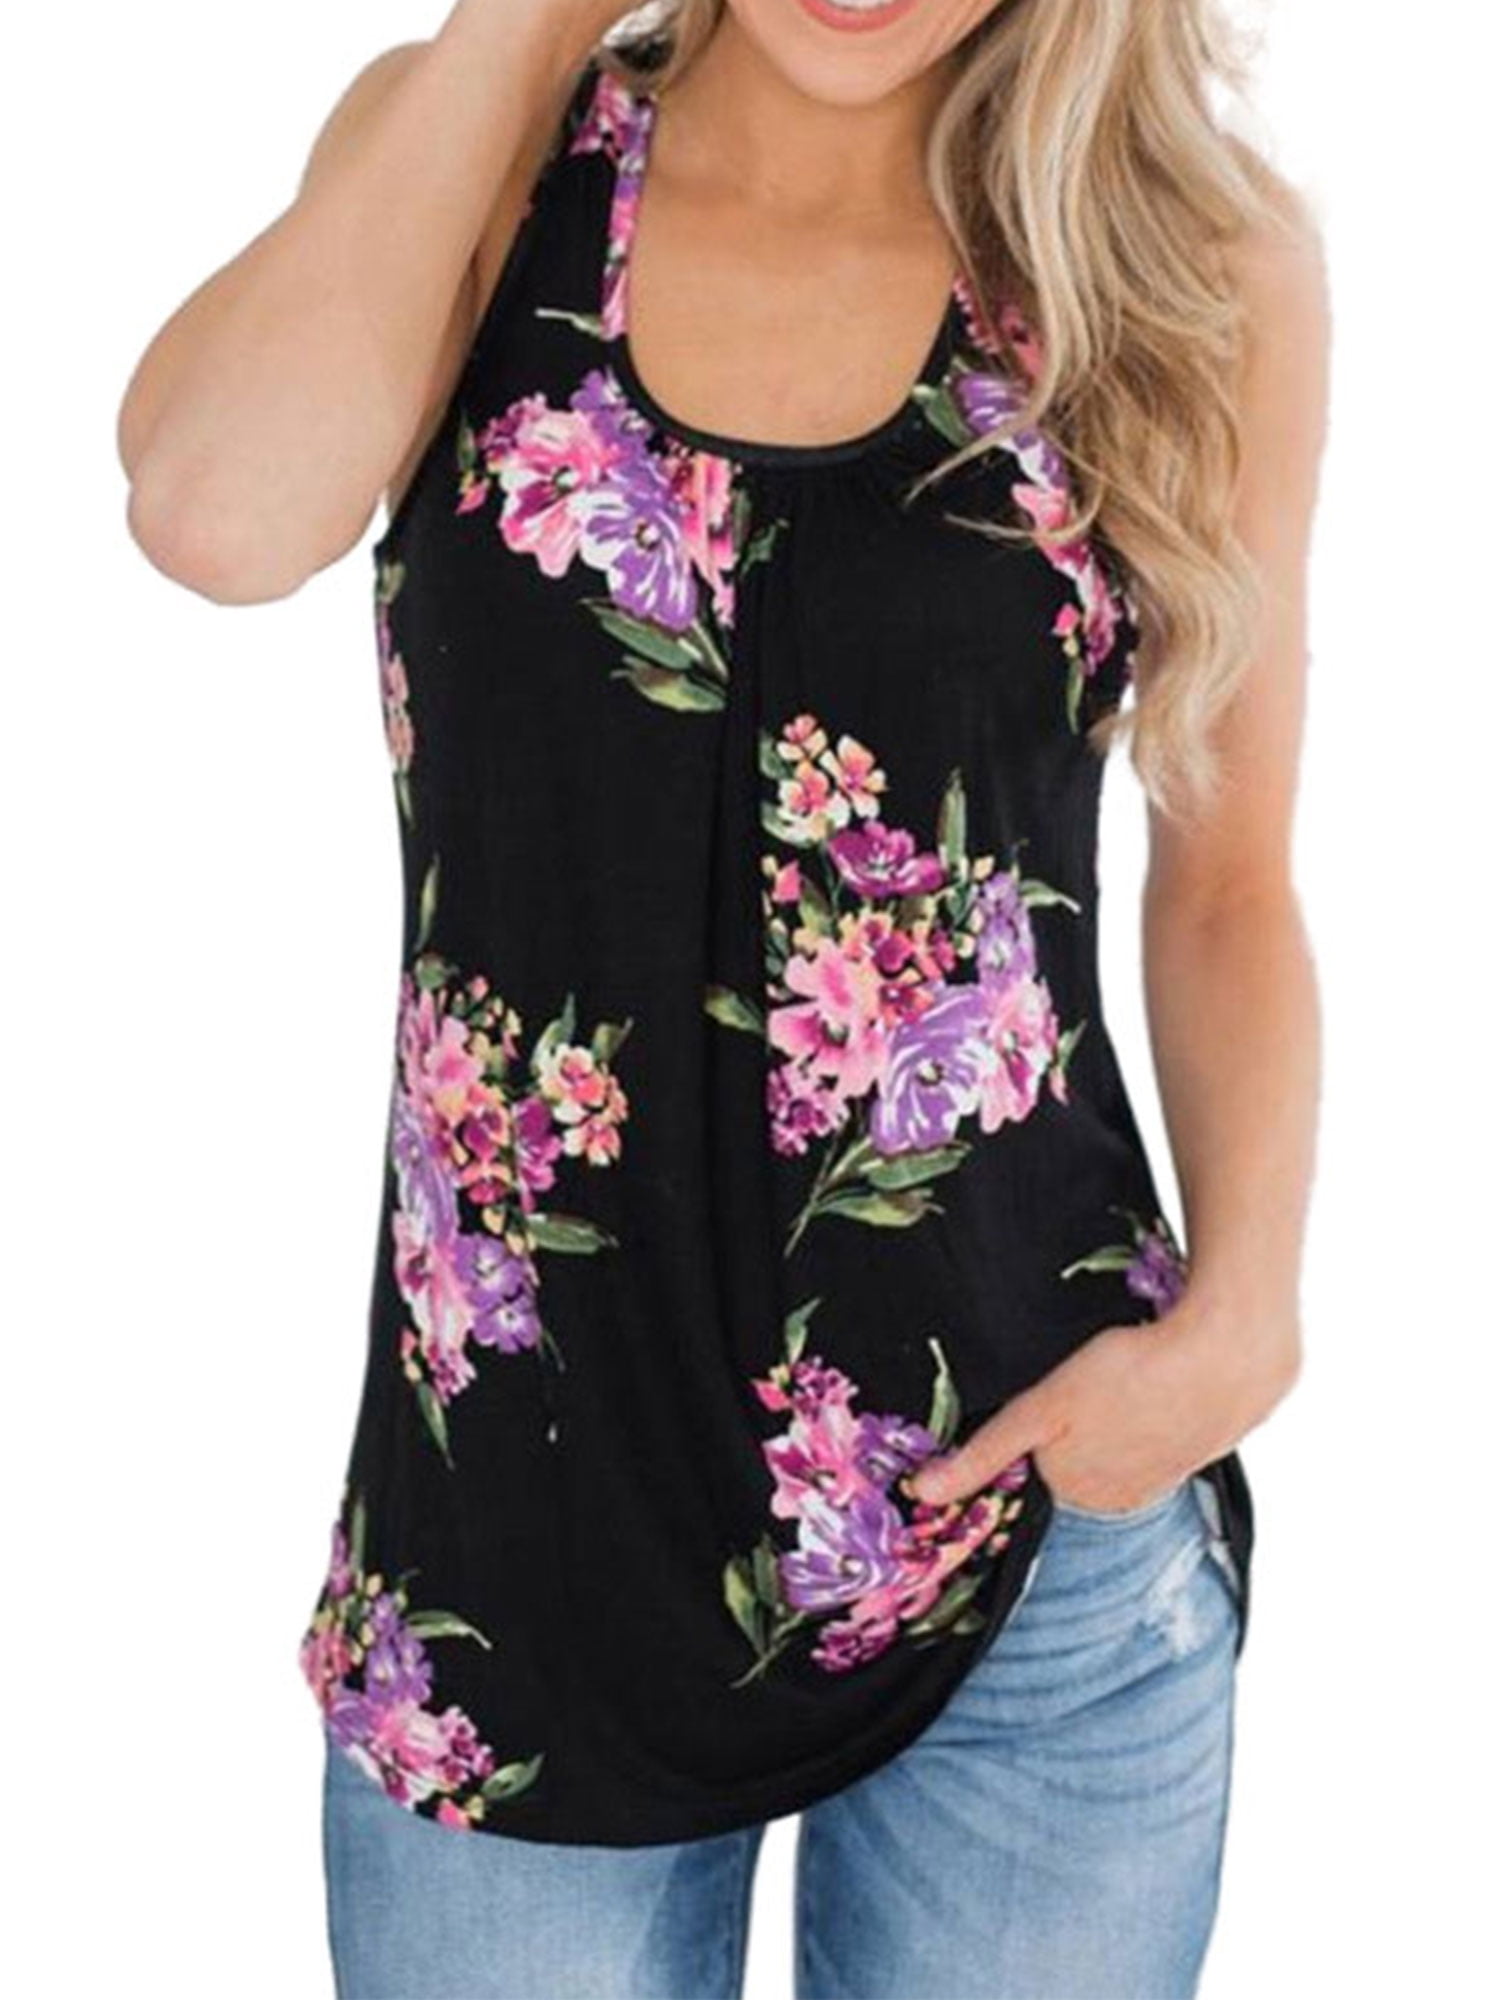 HIKO23 Women Ladies O Neck T-Shirt Sleeveless Floral Print Casual Tops Blouse Vest Tank